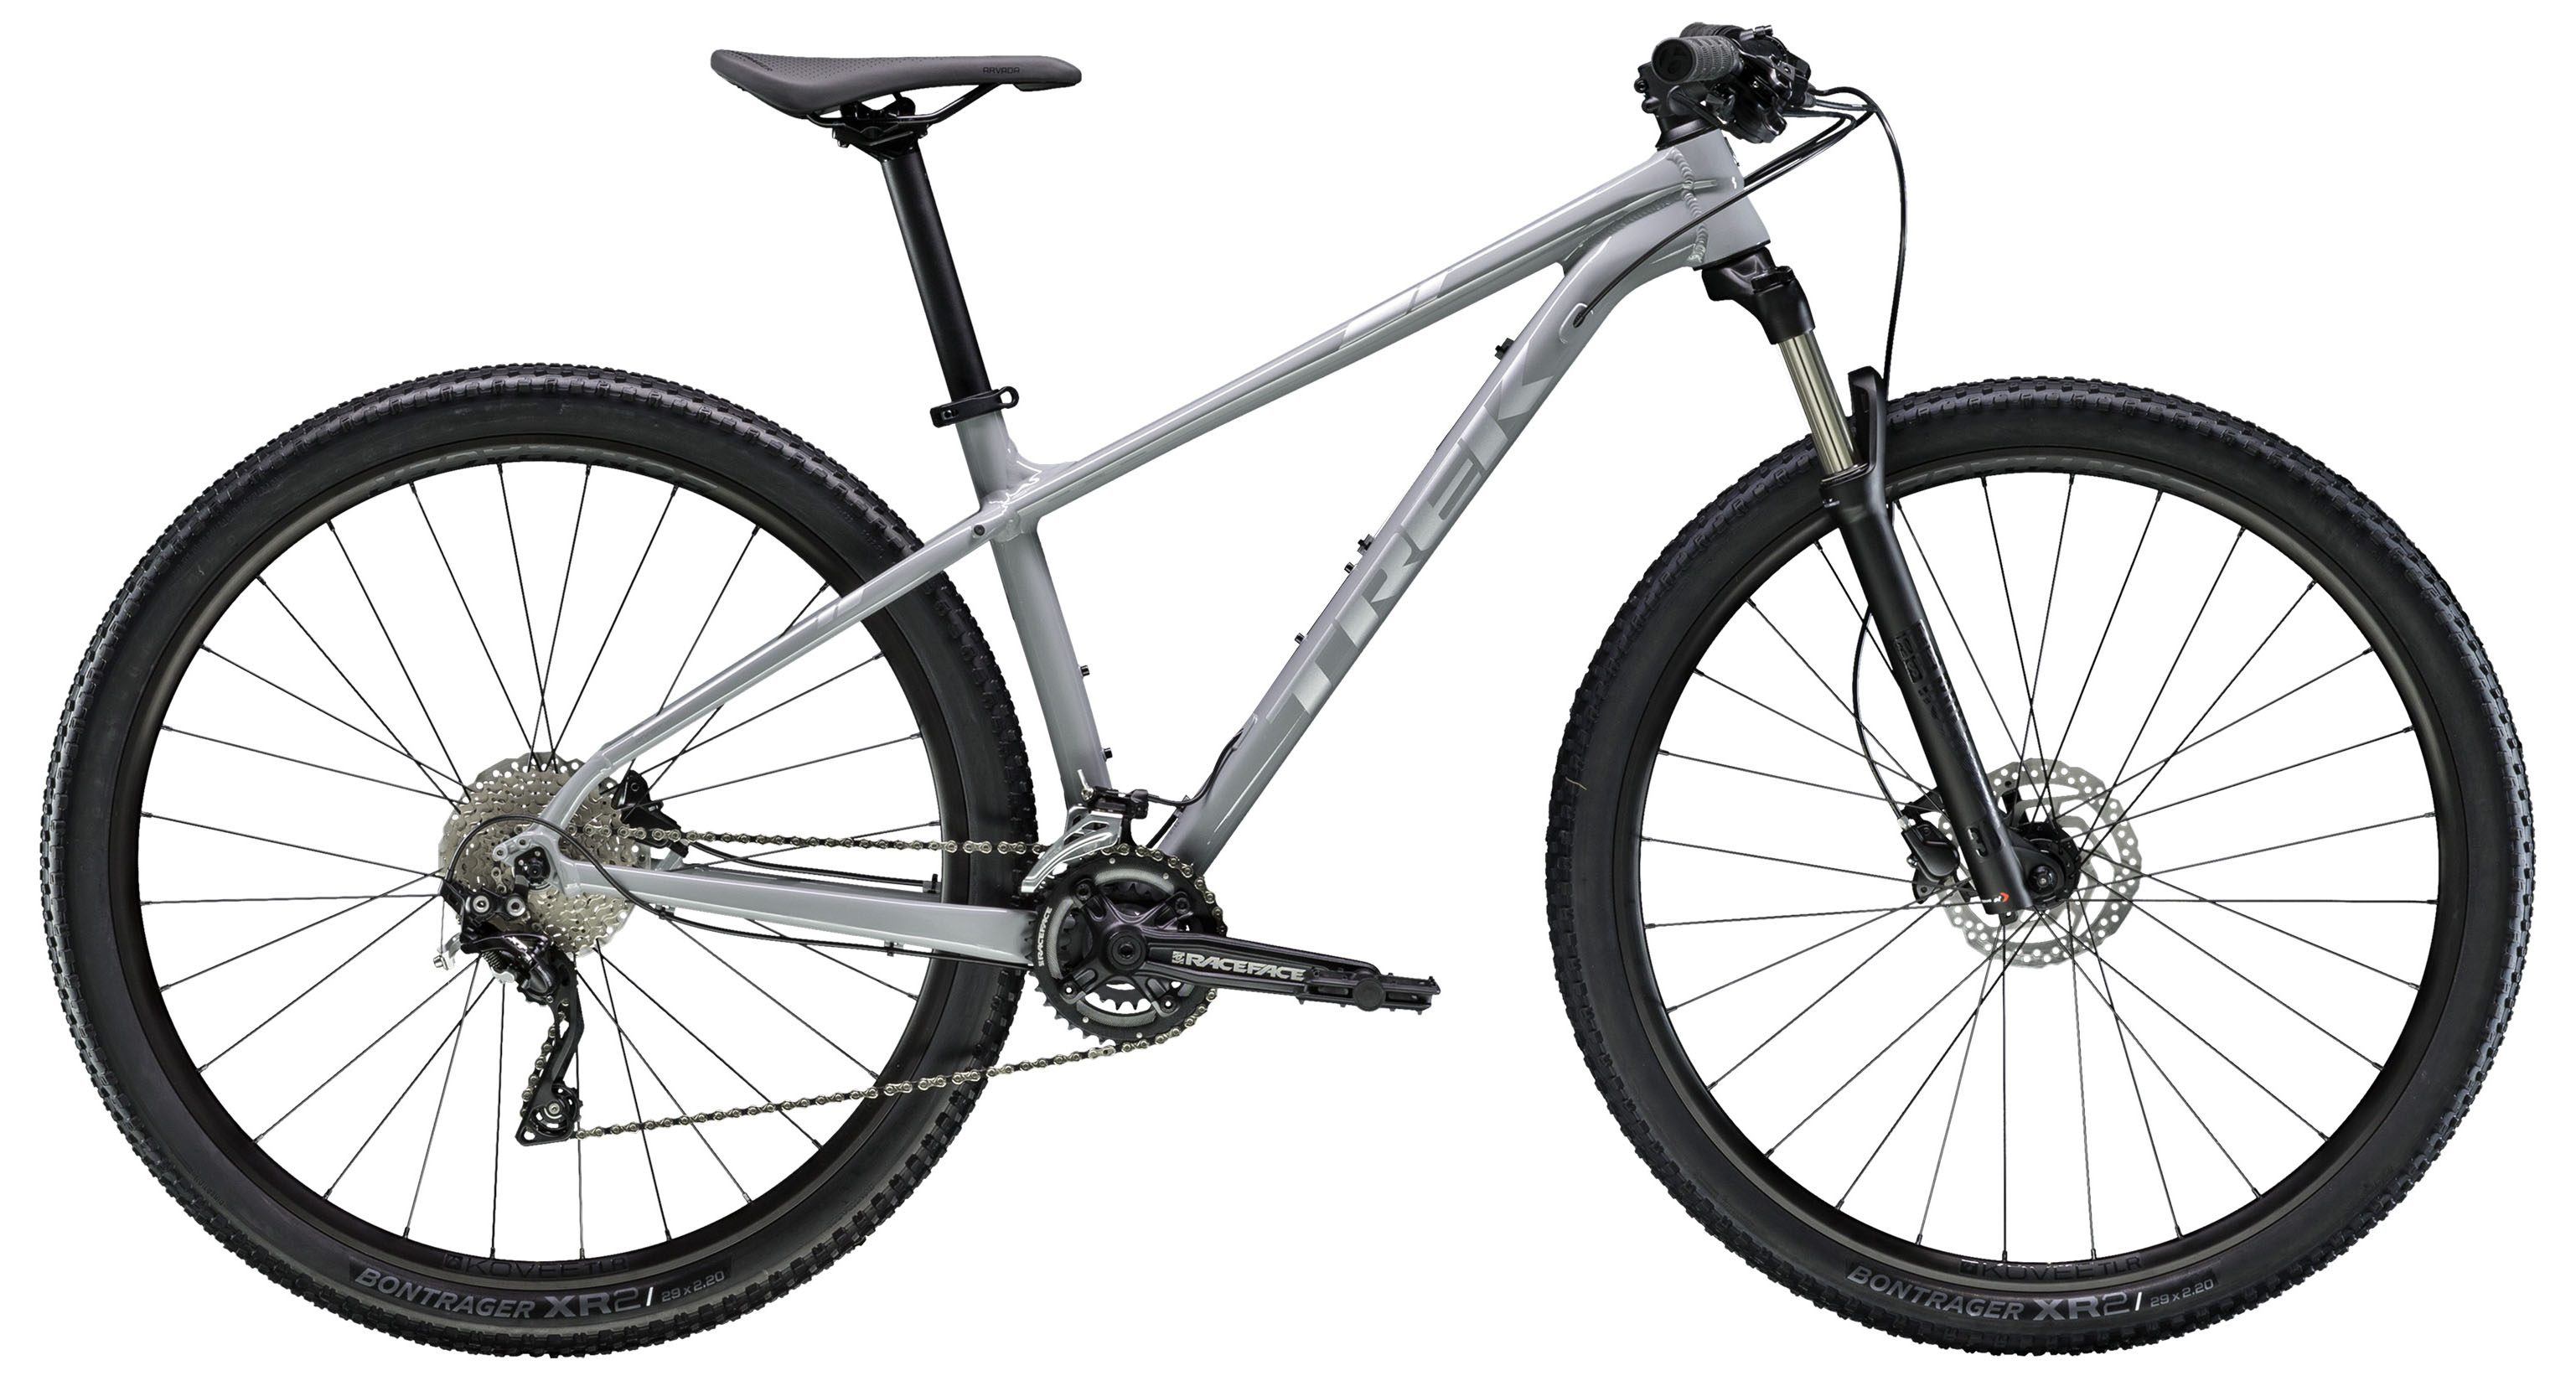  Велосипед Trek X-Caliber 8 27,5 2019